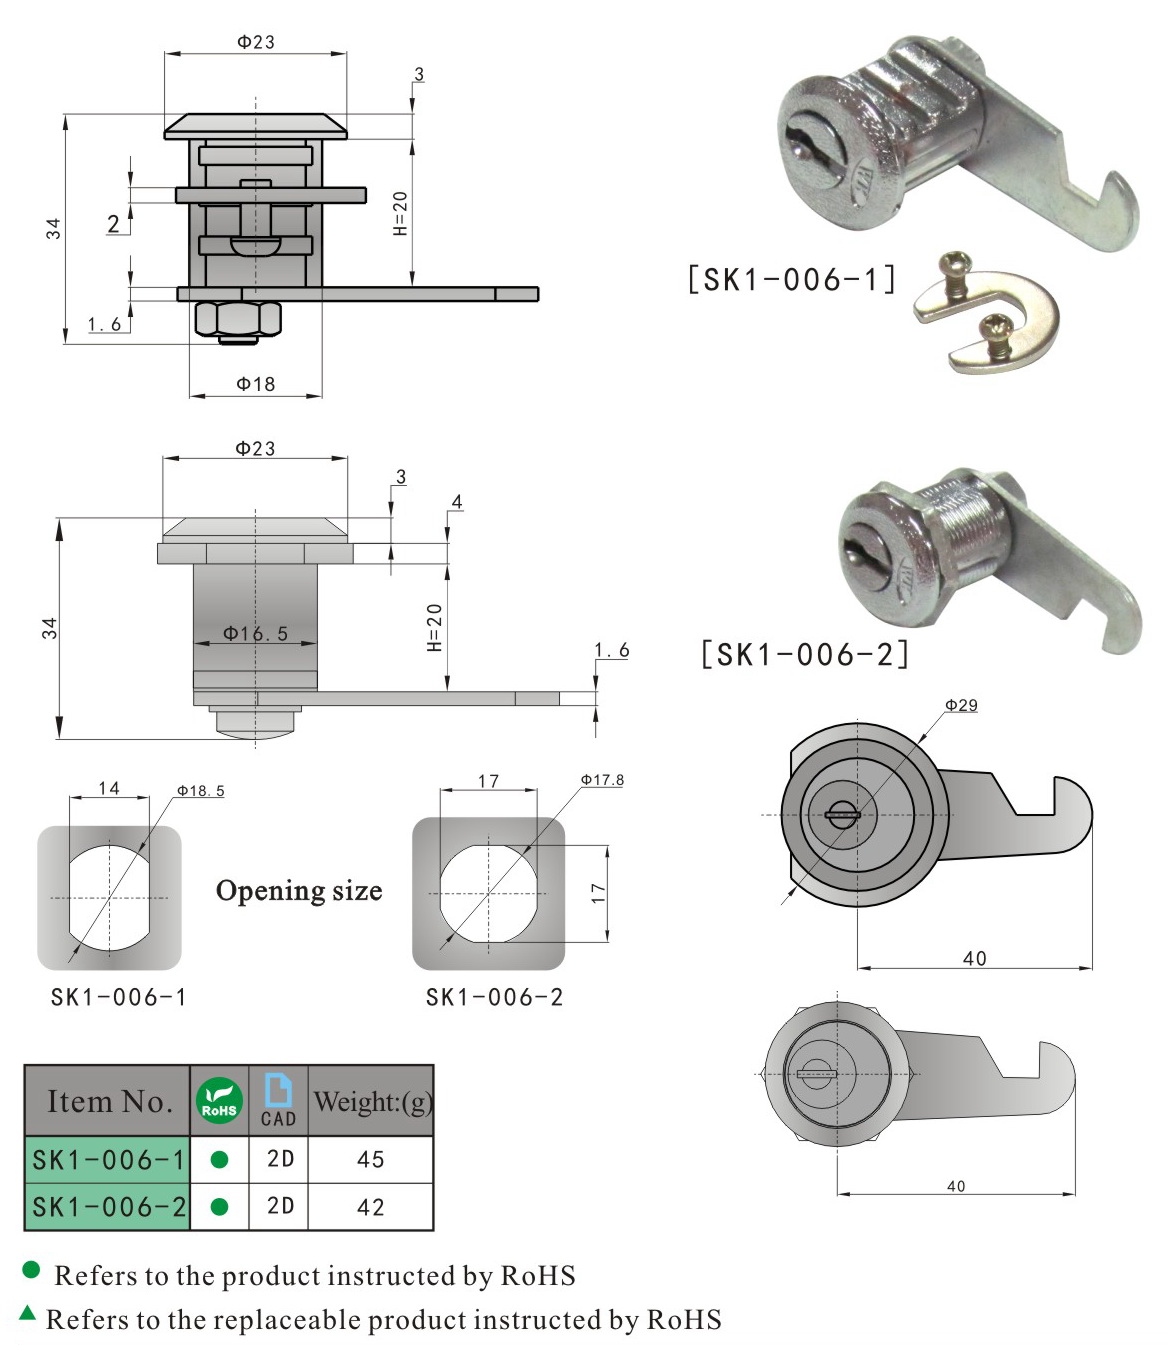 SK1-006 KUNLONG Industrial Cam Lock